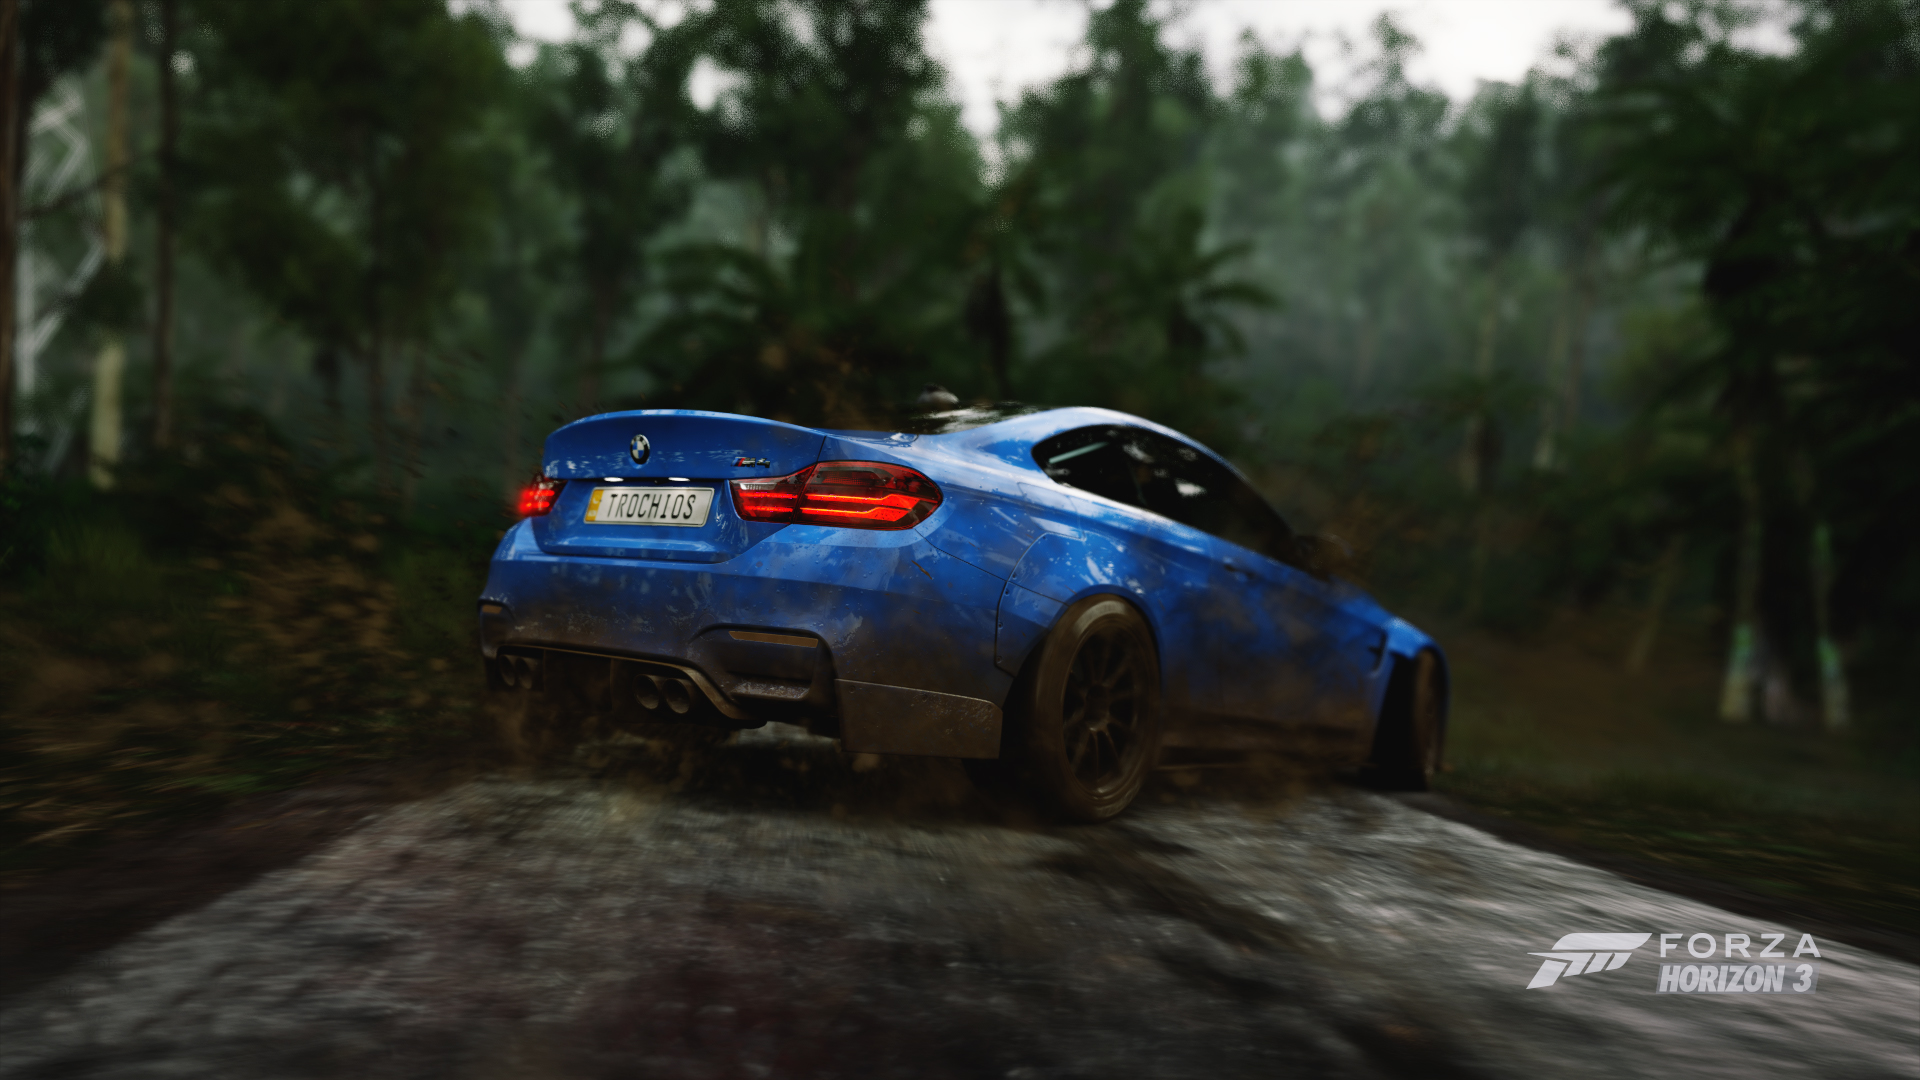 General 1920x1080 Forza Forza Horizon 3 BMW M4 offroad mud video games drift car